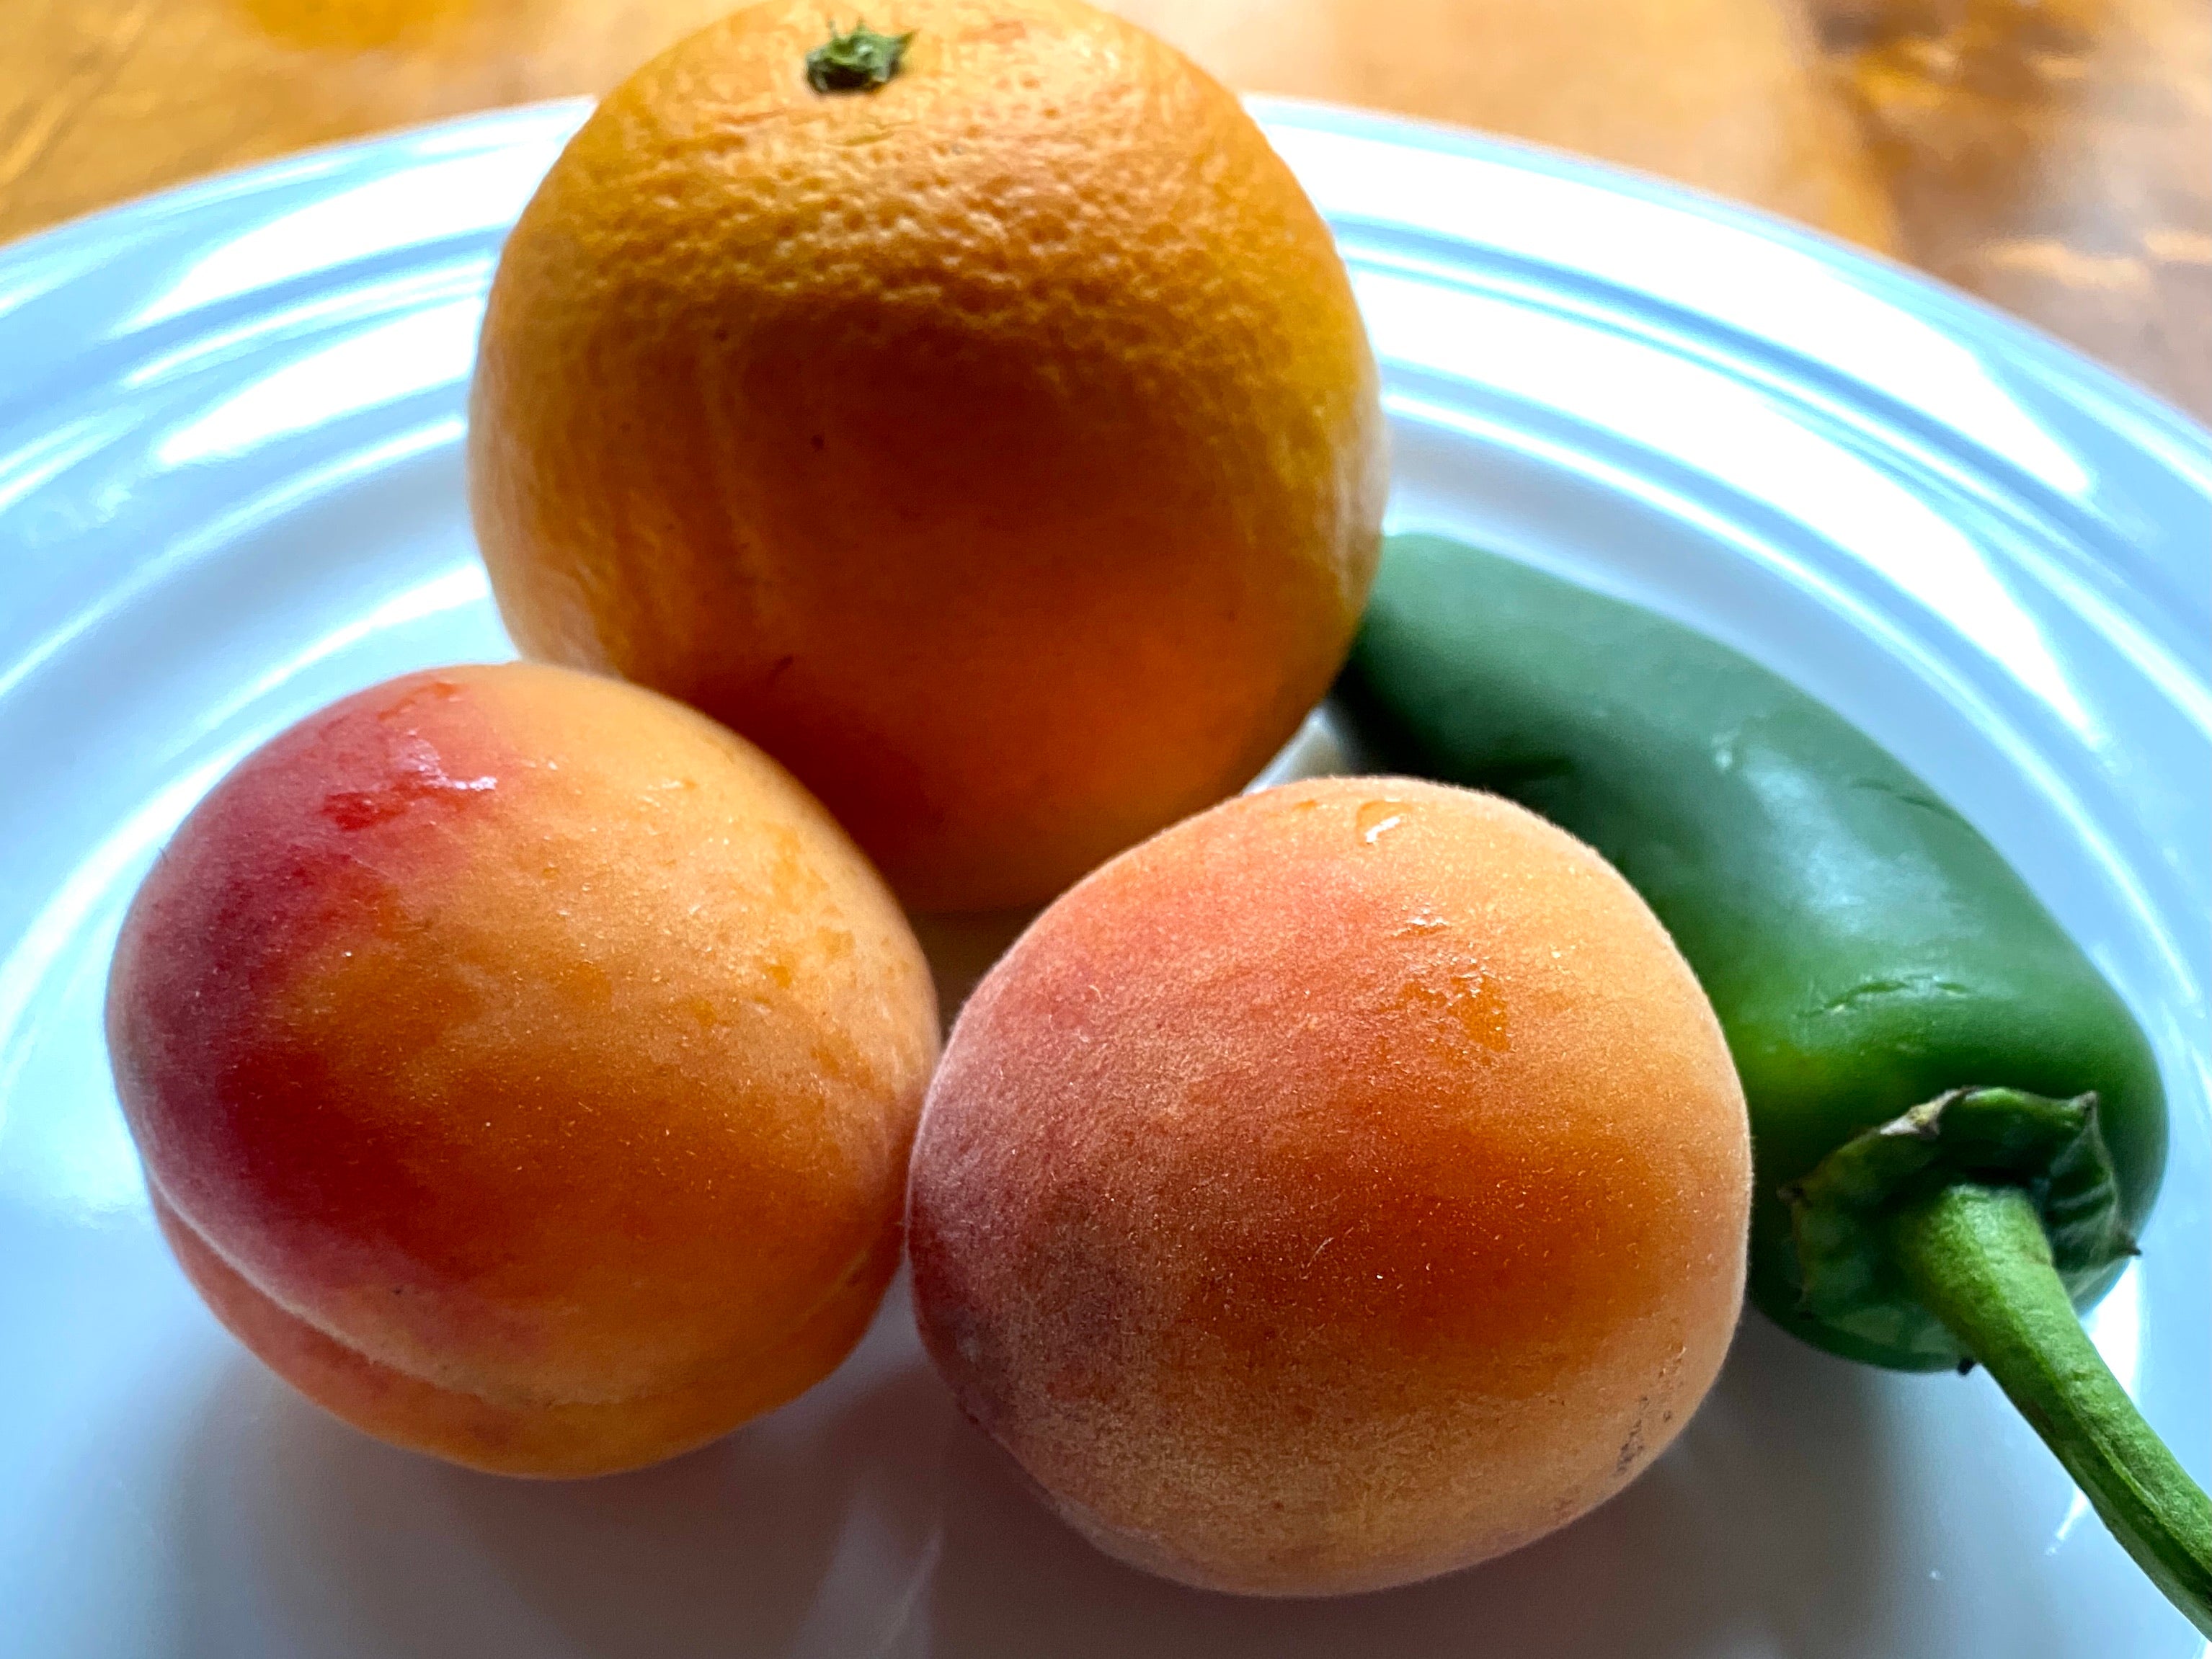 Apricot Orange Jalapeno